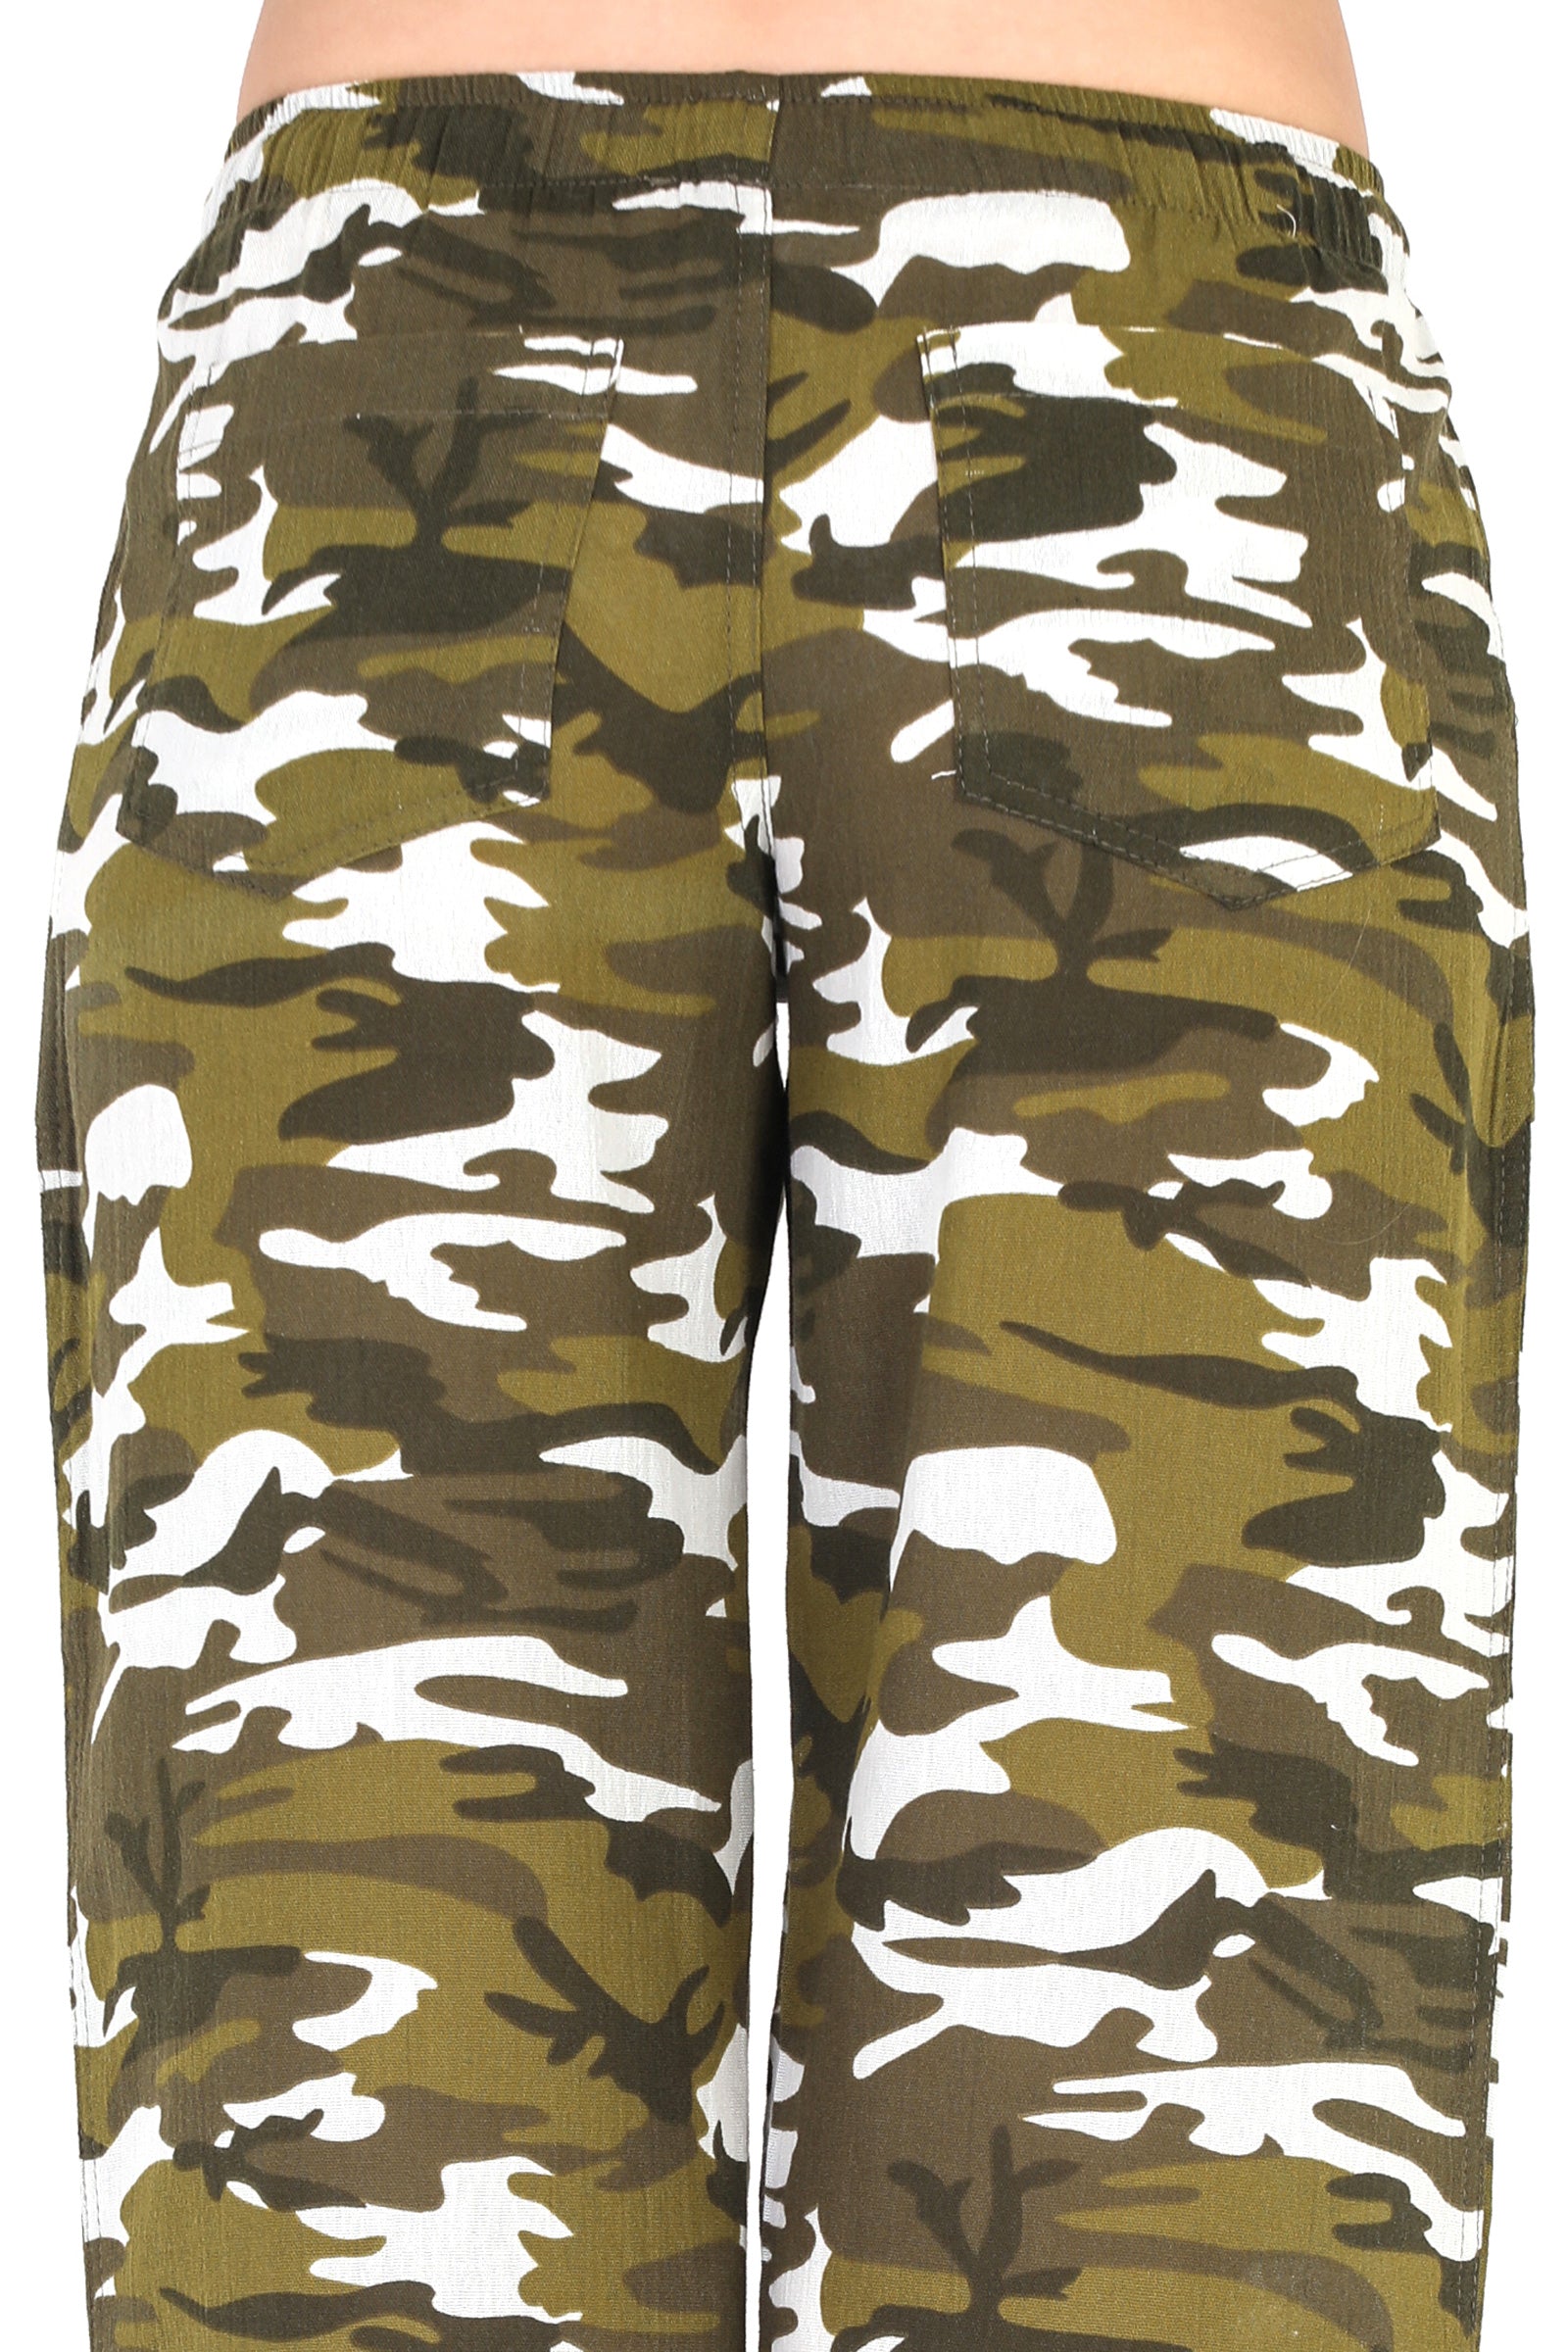 Women's Gauze Cotton PJ & Beach Pants with Pockets (Green Camo)